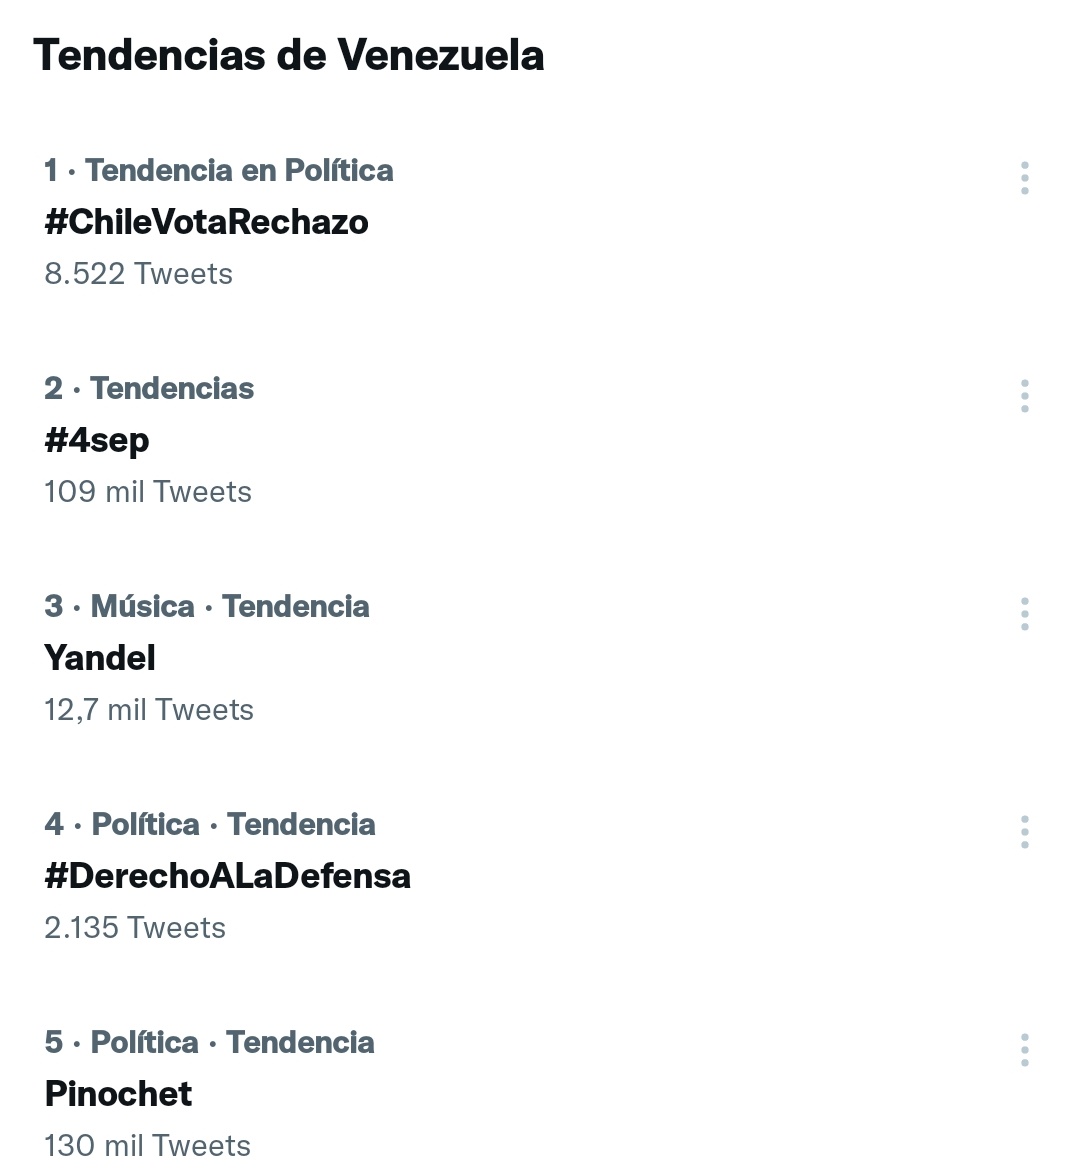 Tendencias en Venezuela hoy #5Sep 6:28am 🇻🇪

#ChileVotaRechazo
#Yandel
#DerechoALaDefensa 🔥¡Alex Saab! 
#Pinochet

@POTUS @JoeBiden @usembassyve @VP @StateDept @FLOTUS @cartajuanero @StateSPEHA @CNN @ThePost @washingtonpost